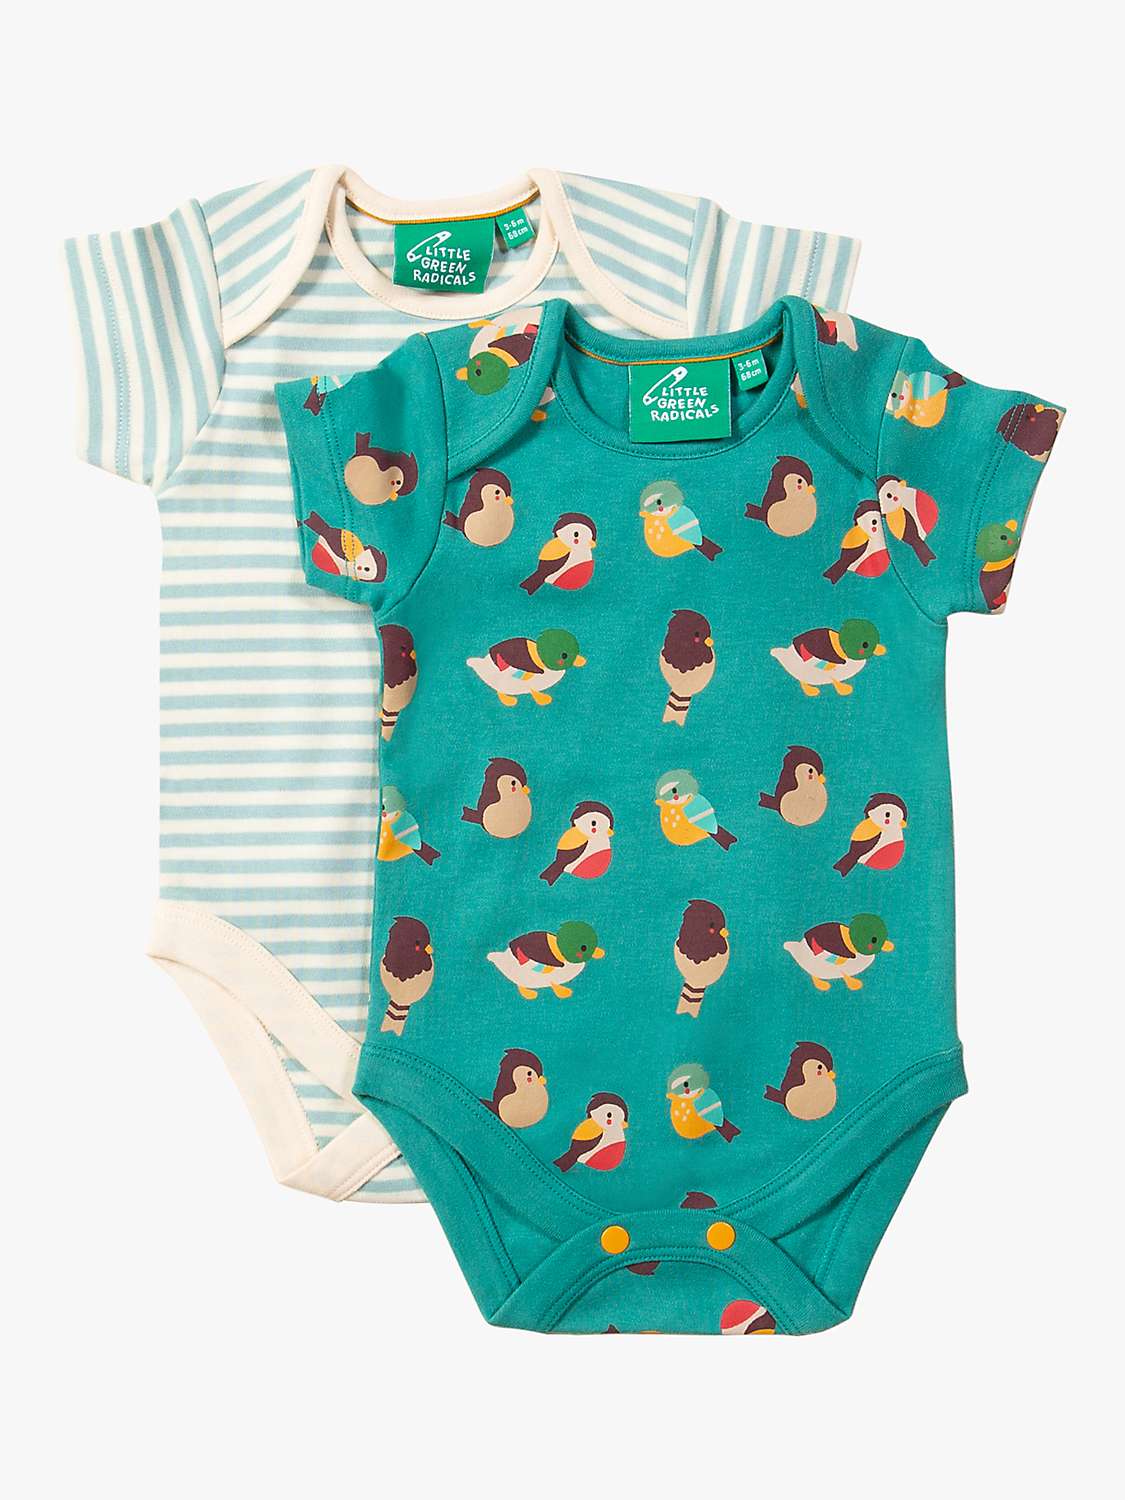 Buy Little Green Radicals Baby Garden Birds Organic Cotton Bodysuits, Pack of 2, Multi Online at johnlewis.com